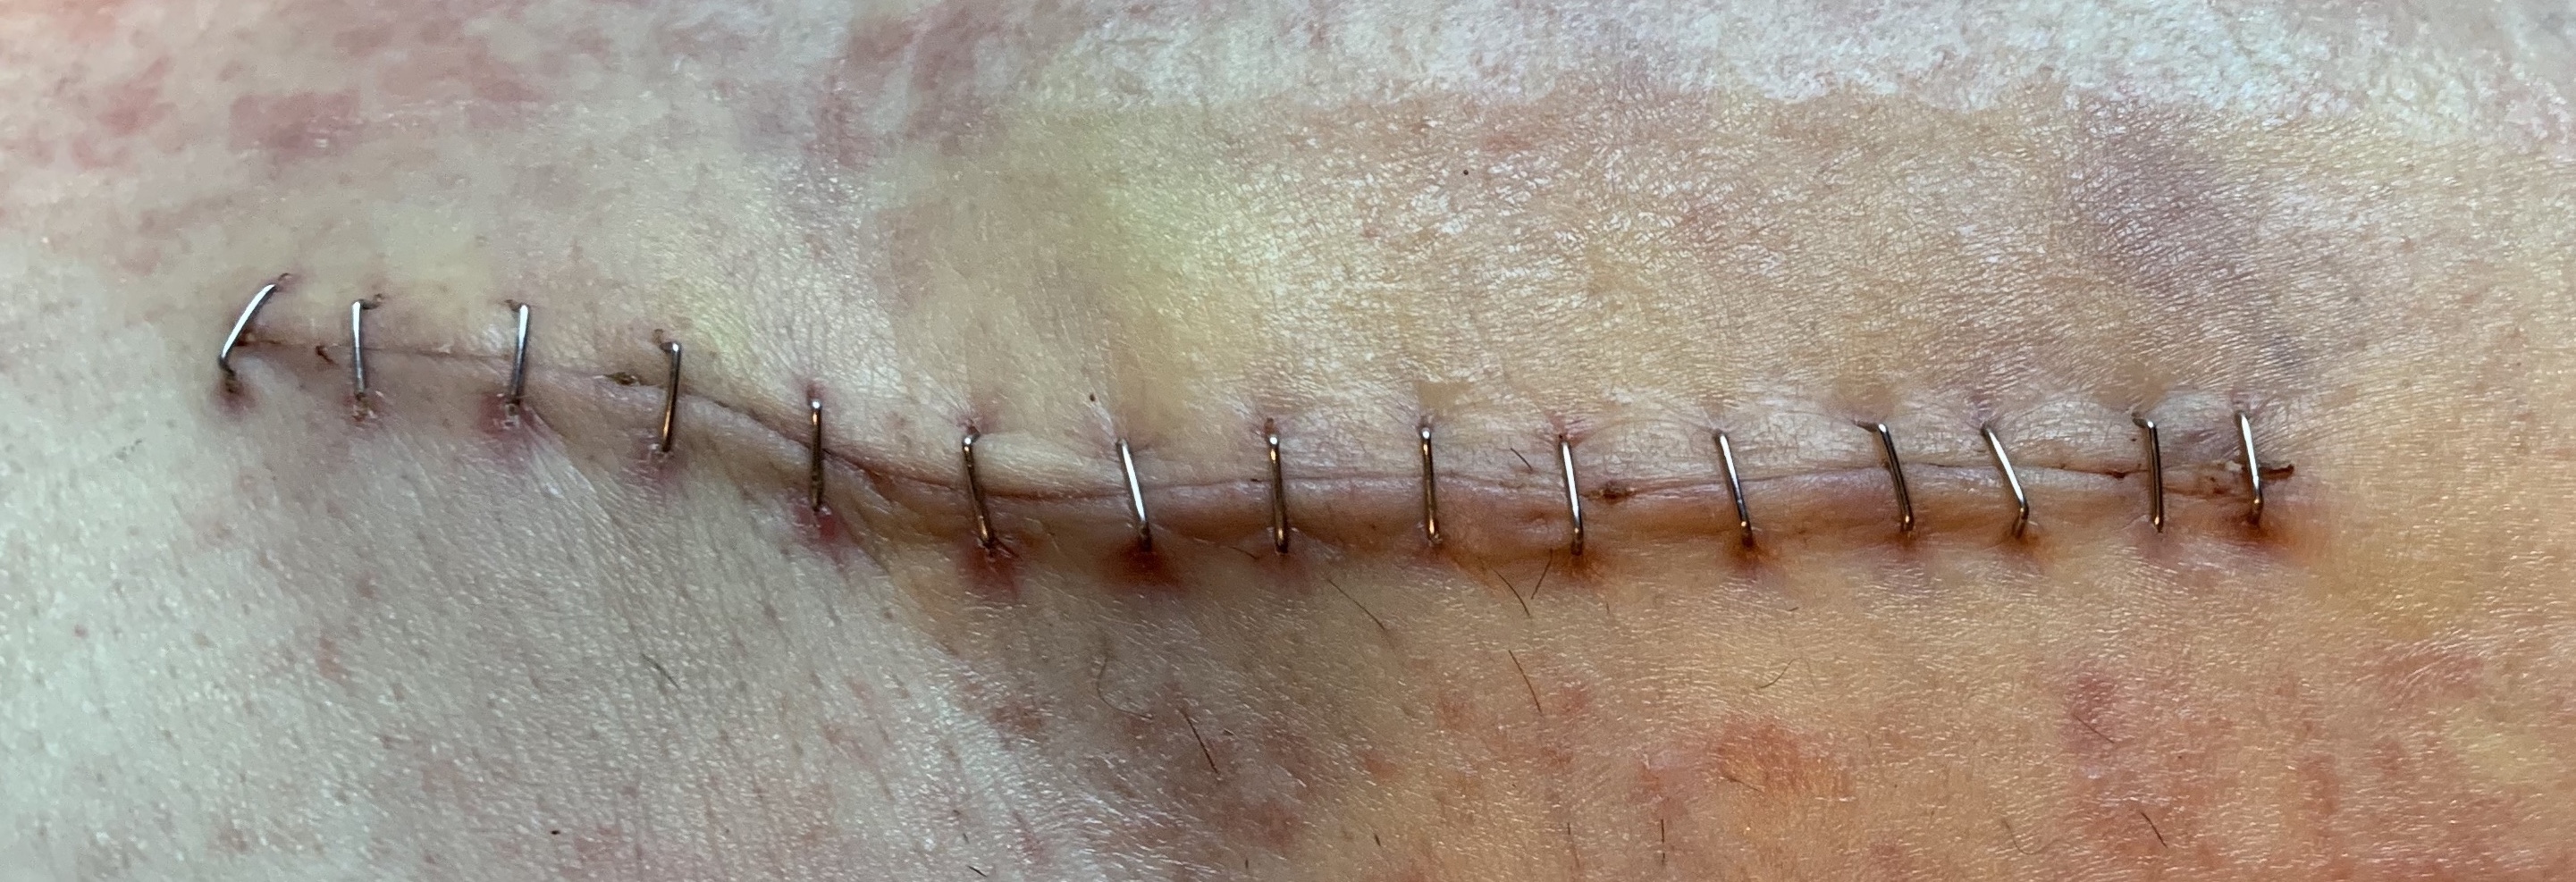 closeup of medical staples closing an incision in caucasian skin